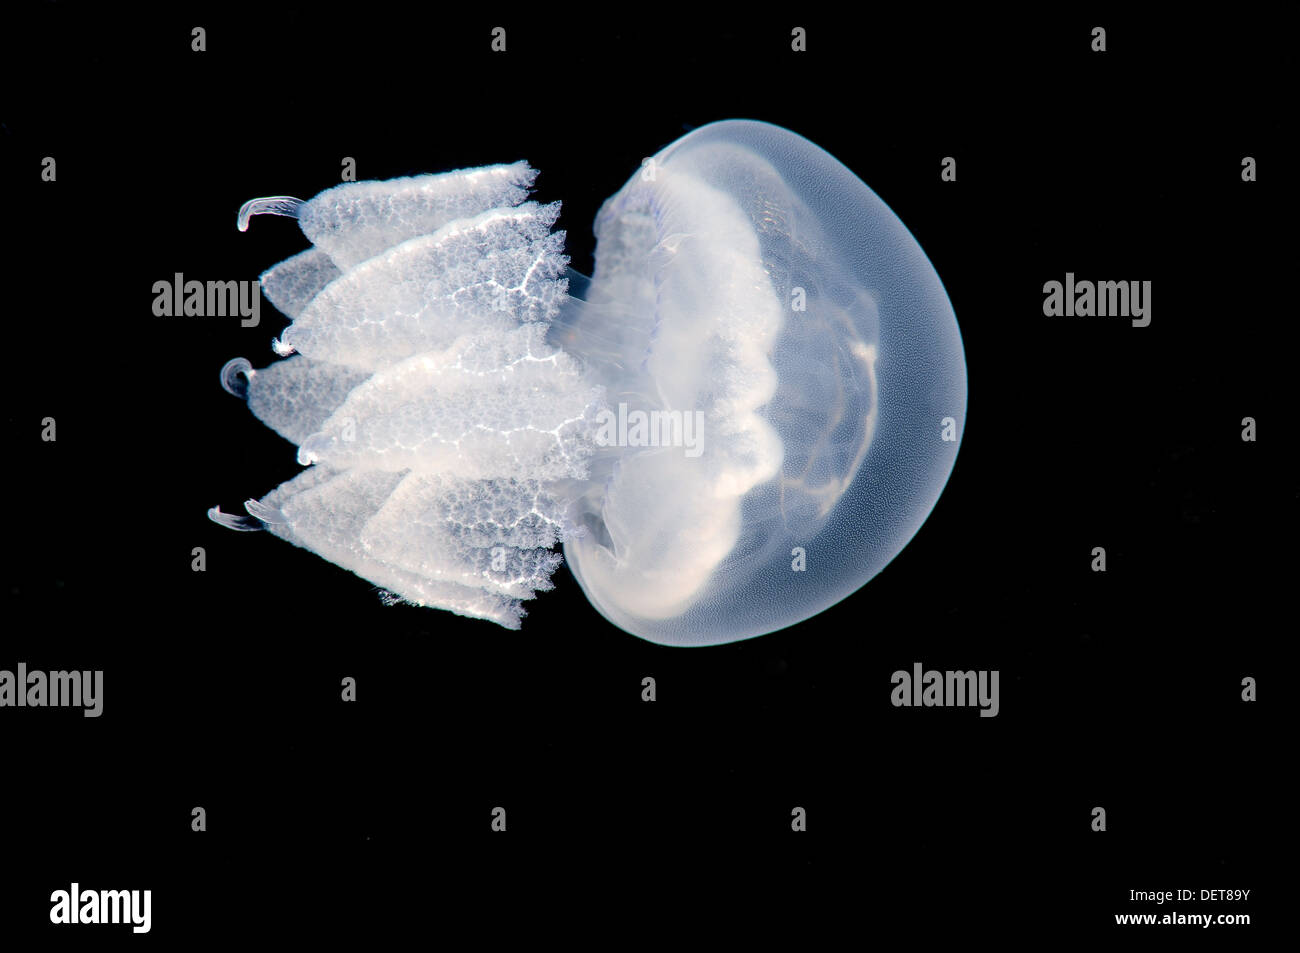 barrel jellyfish or dustbin-lid jellyfish (Rhizostoma pulmo), Black Sea, Crimea, Ukraine Stock Photo